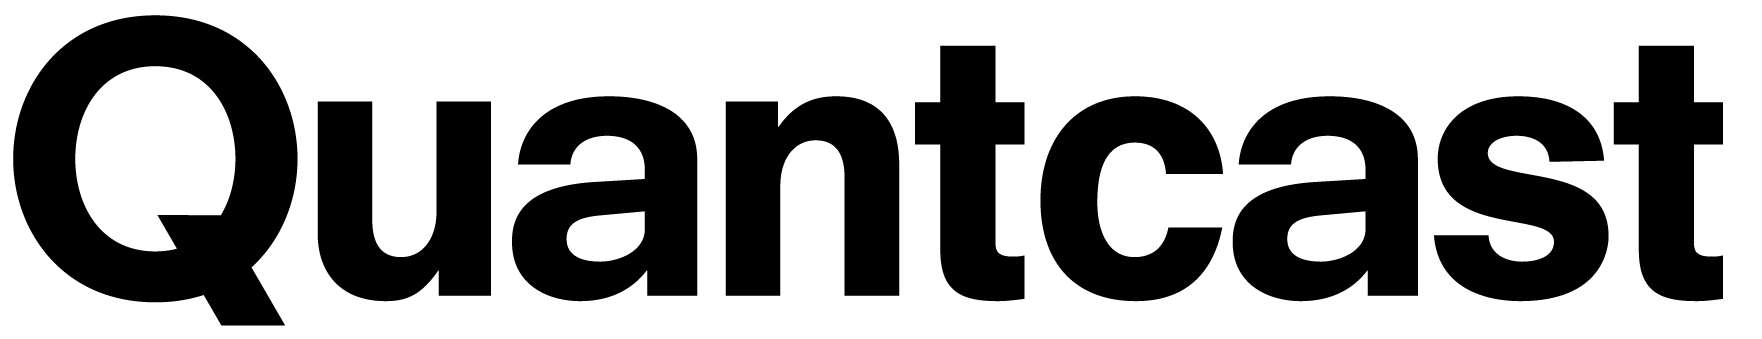 logo-qc-wordmark 2019.png